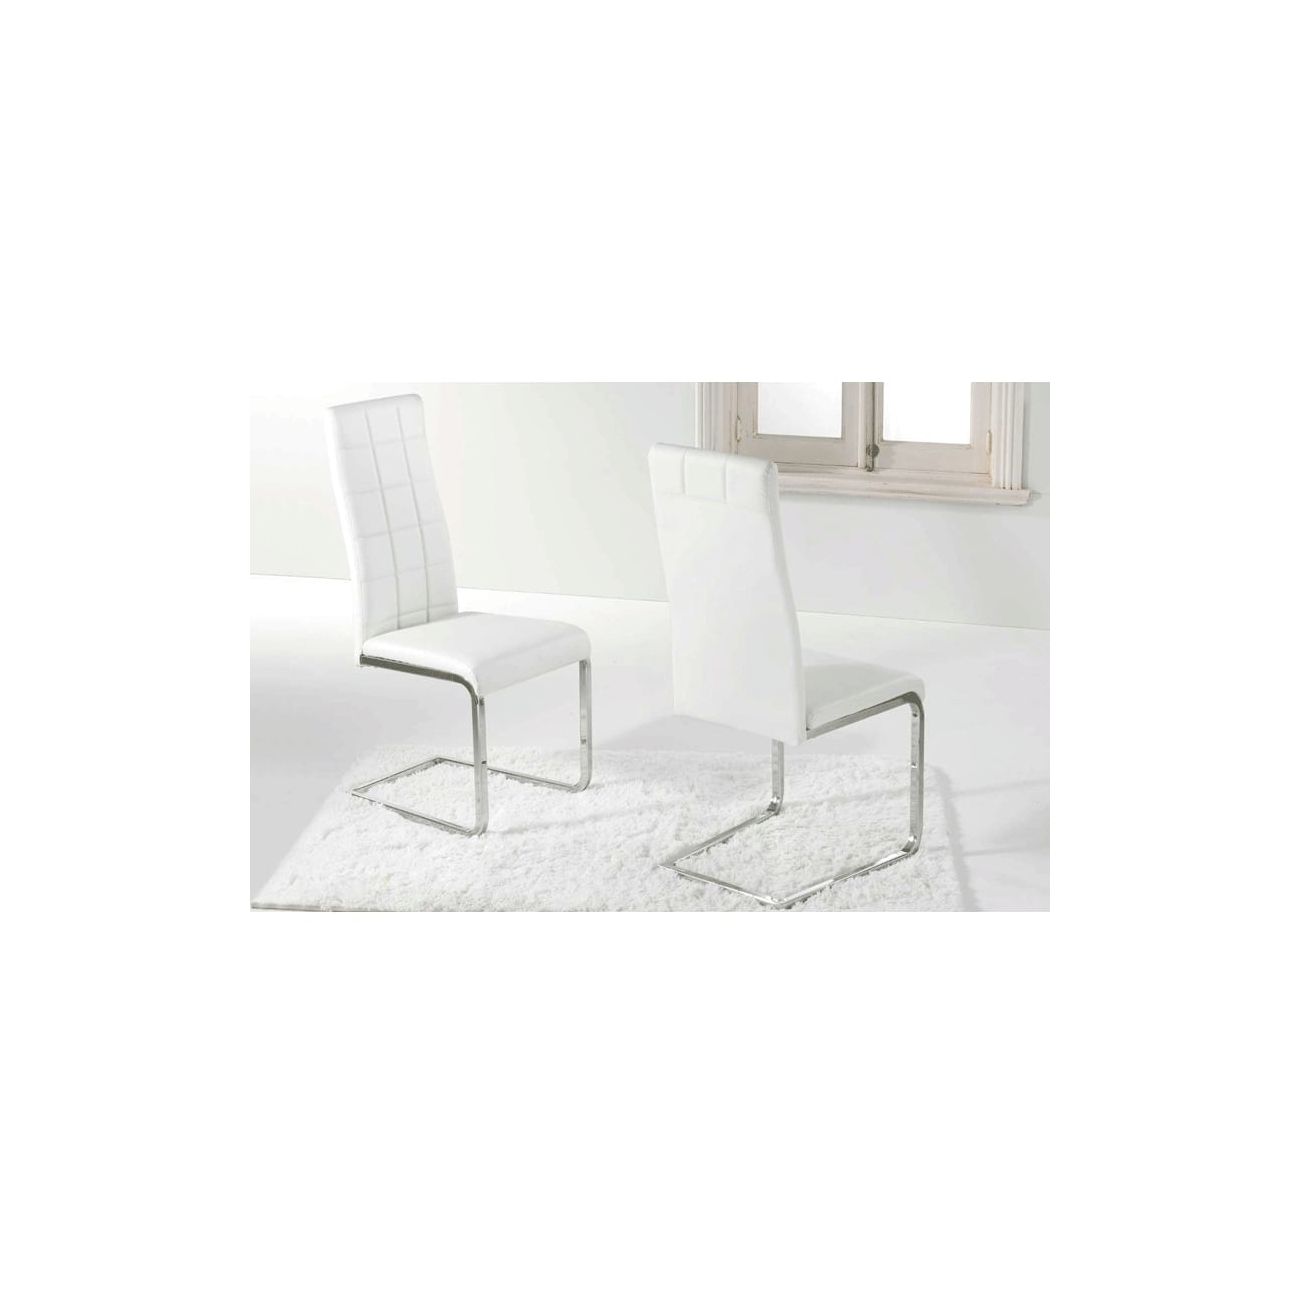 Pack de 2 sillas de comedor blancas. Modelo Brand